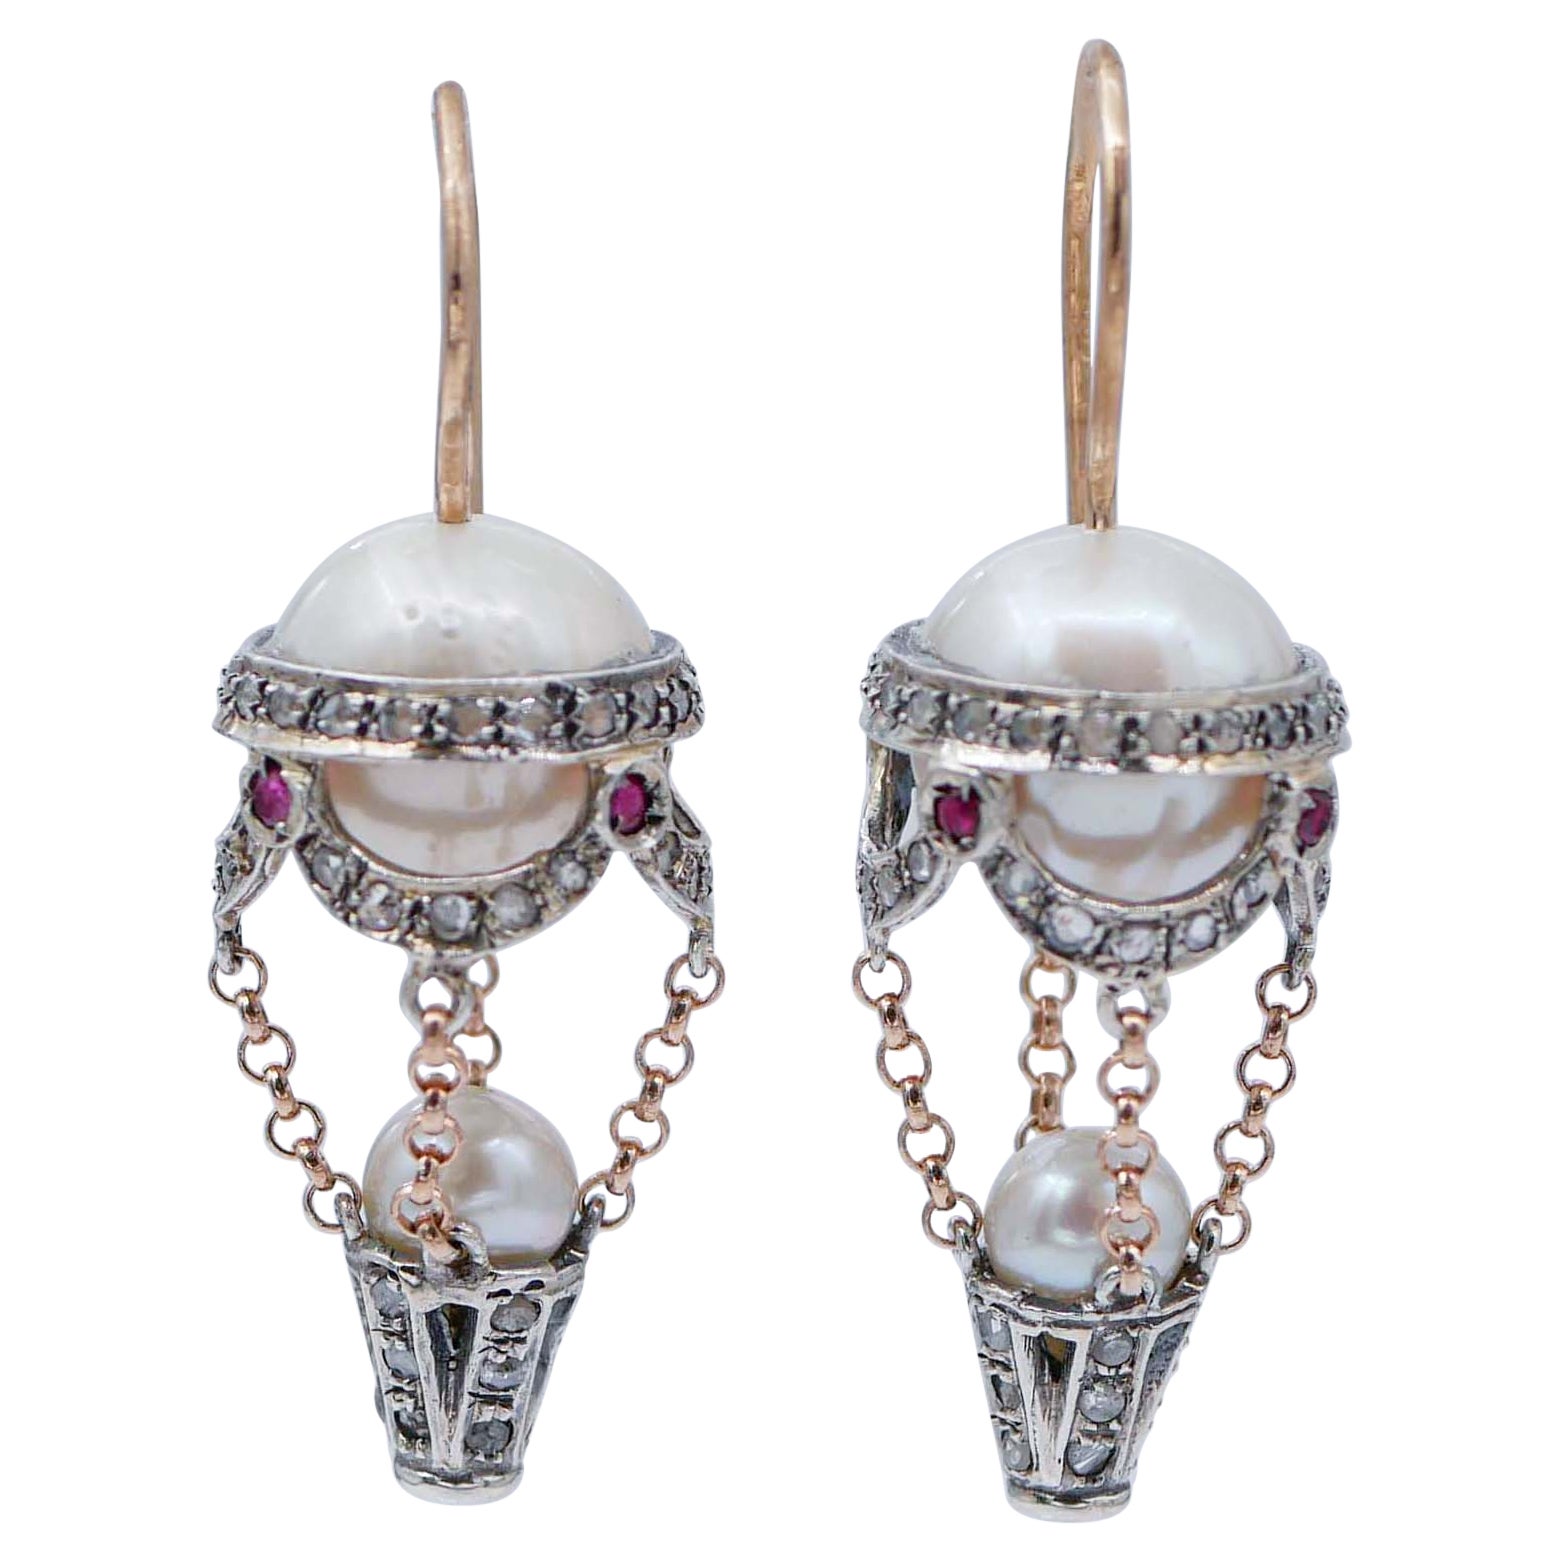 Ohrringe mit Perlen, Rubinen, Diamanten, Roségold und Silber Hot Air Ballon